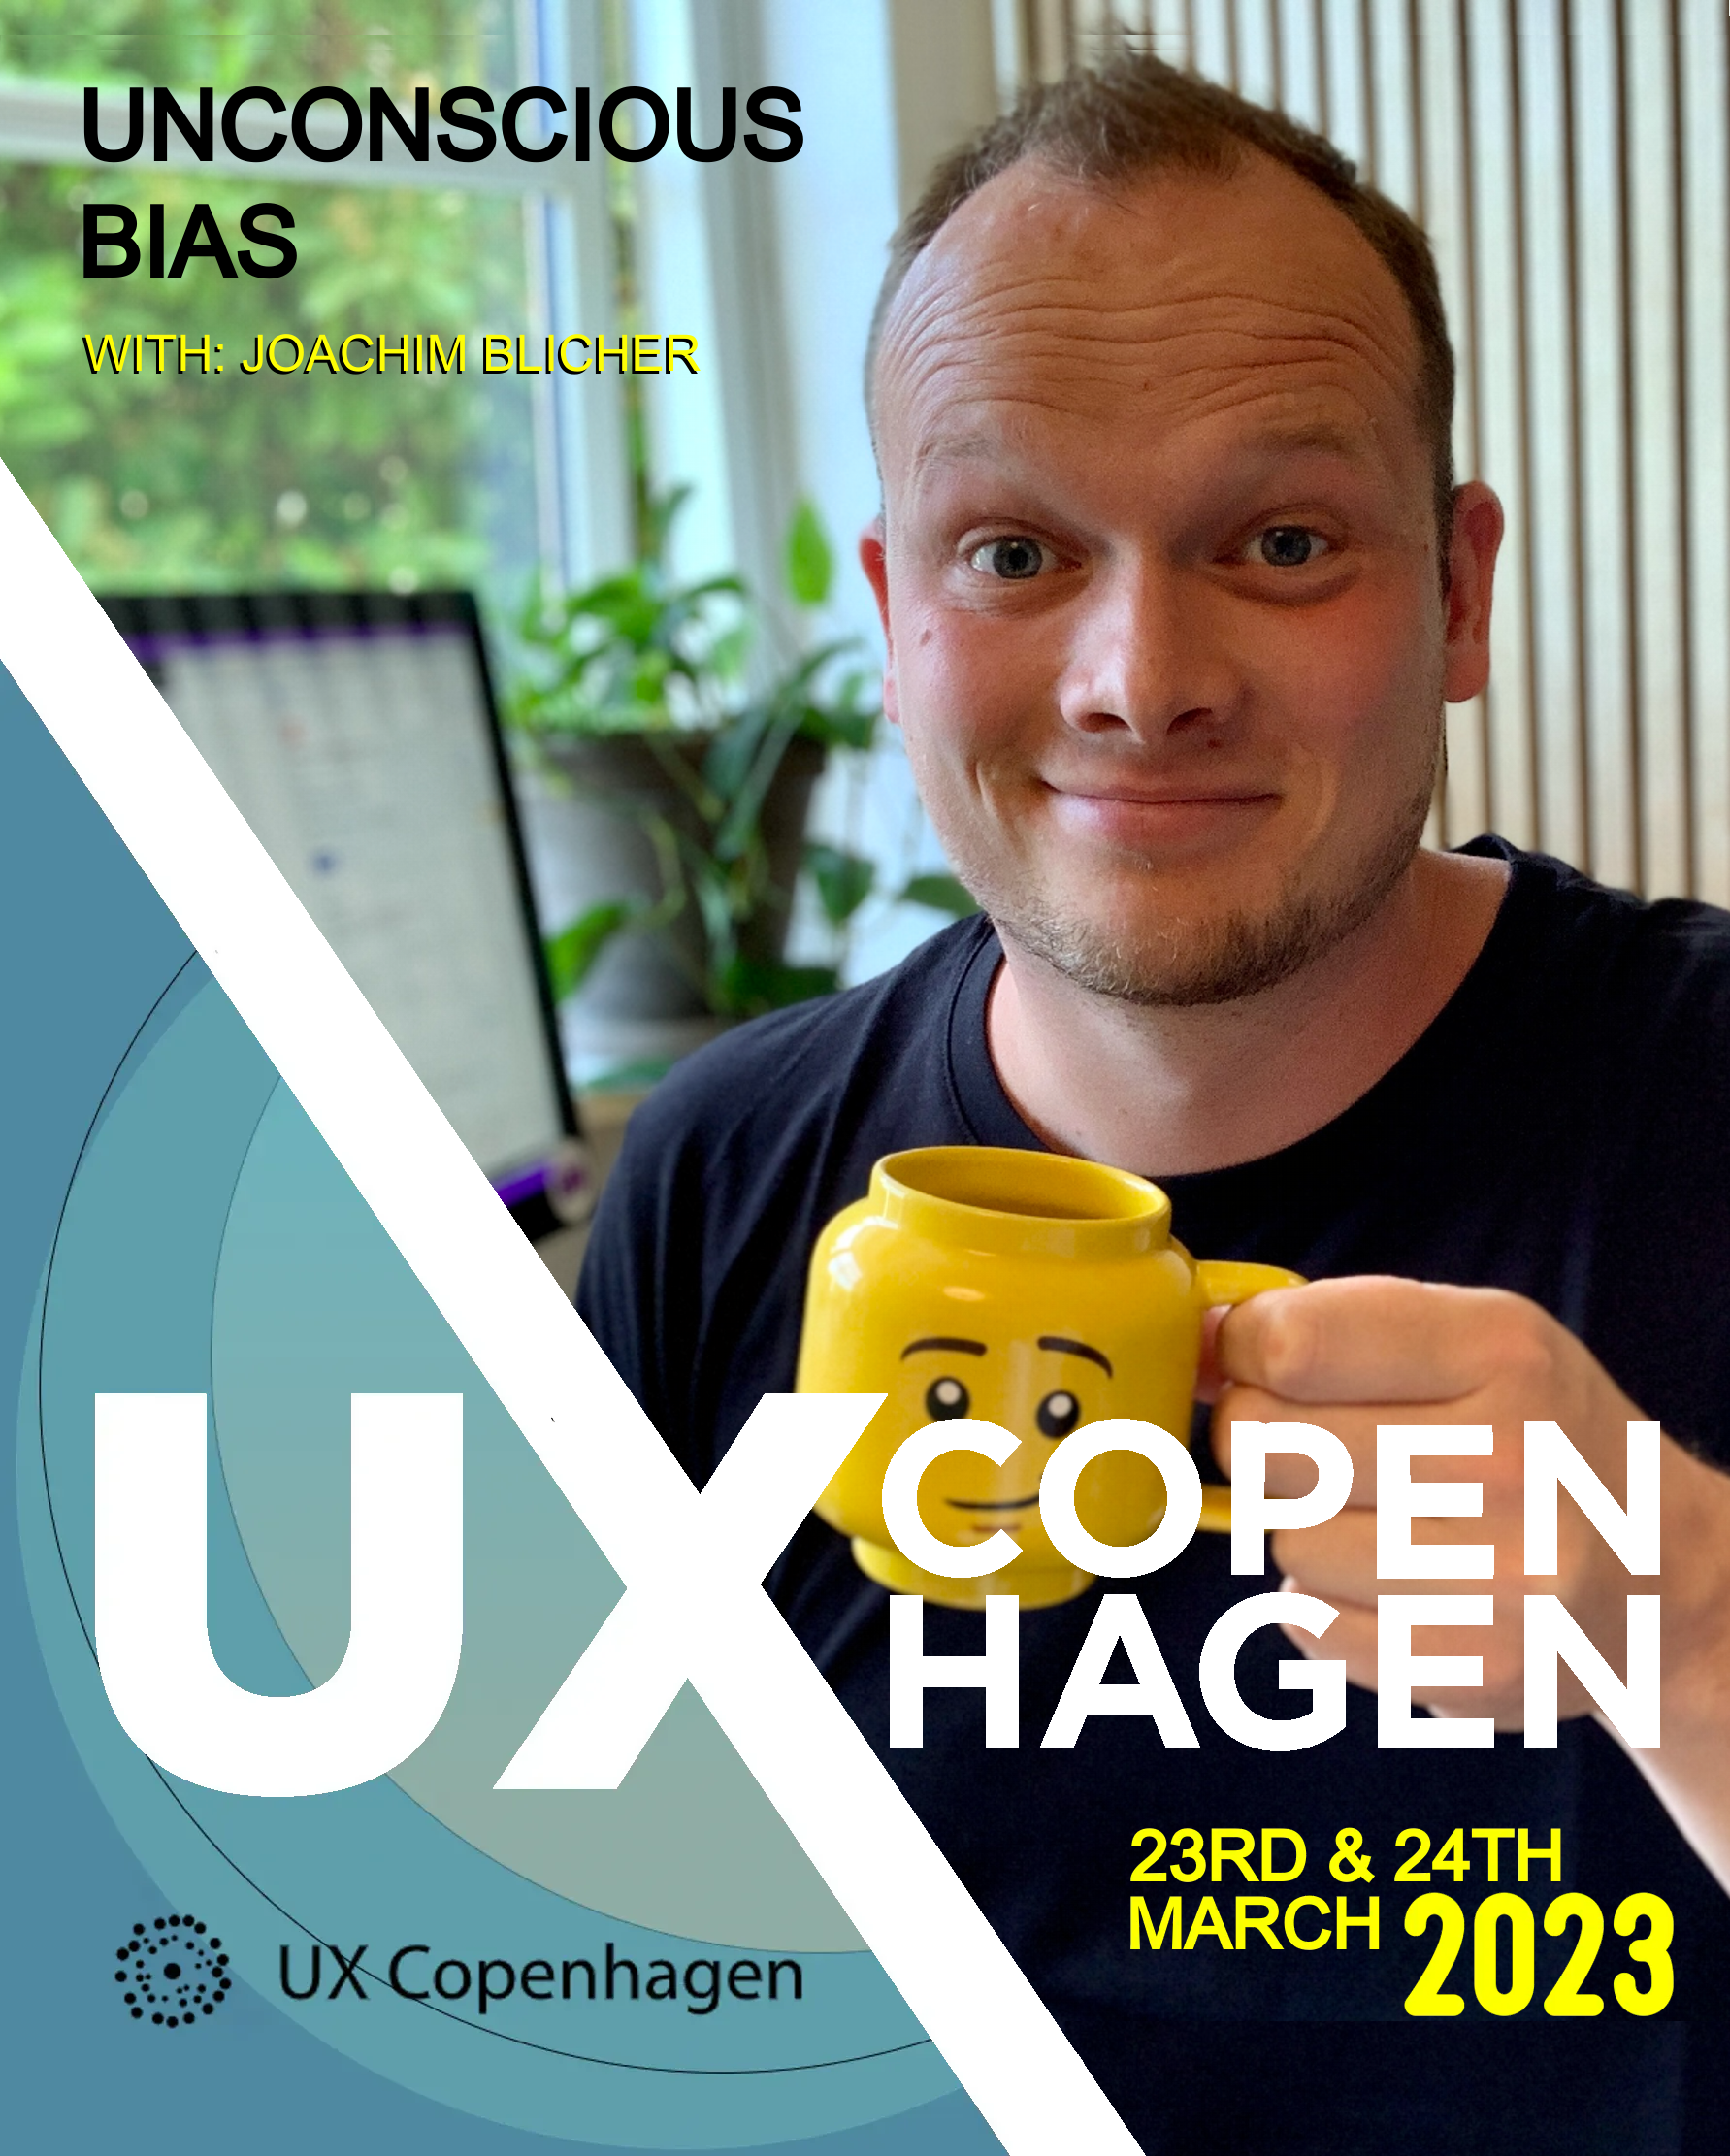 Joachim Blicher speaking at UX Copenhagen 2023